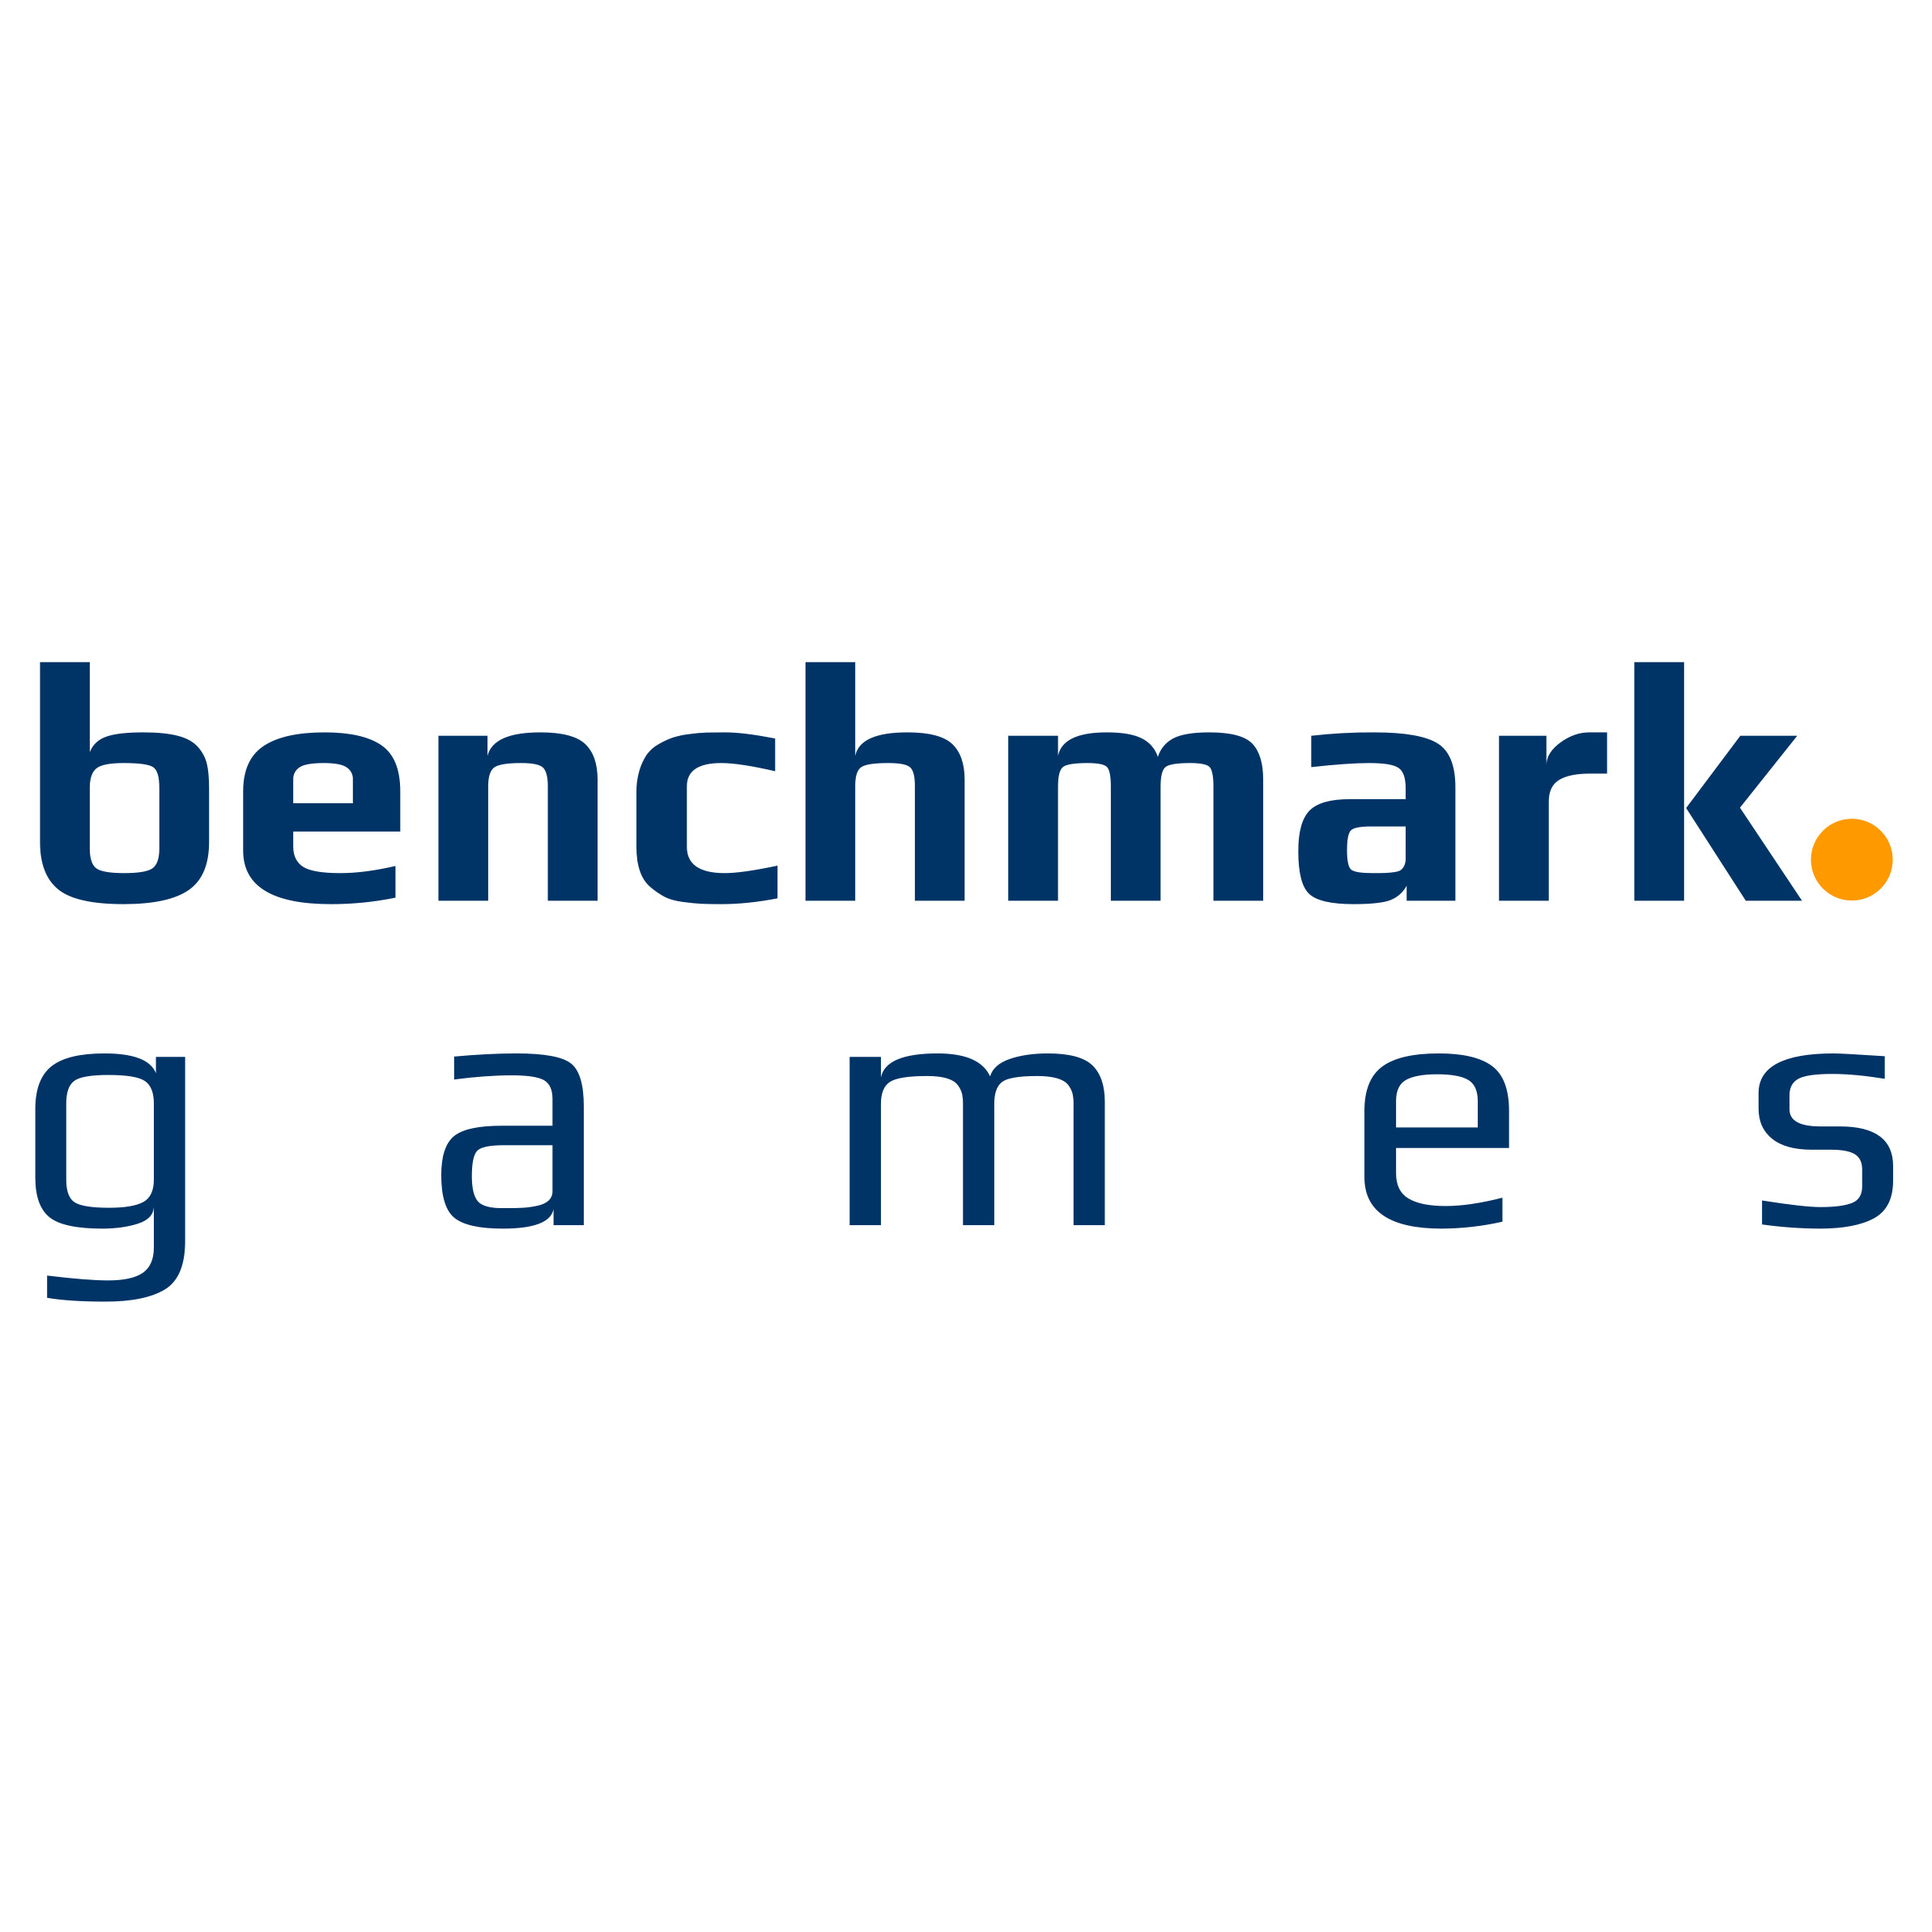 Benchmark.games